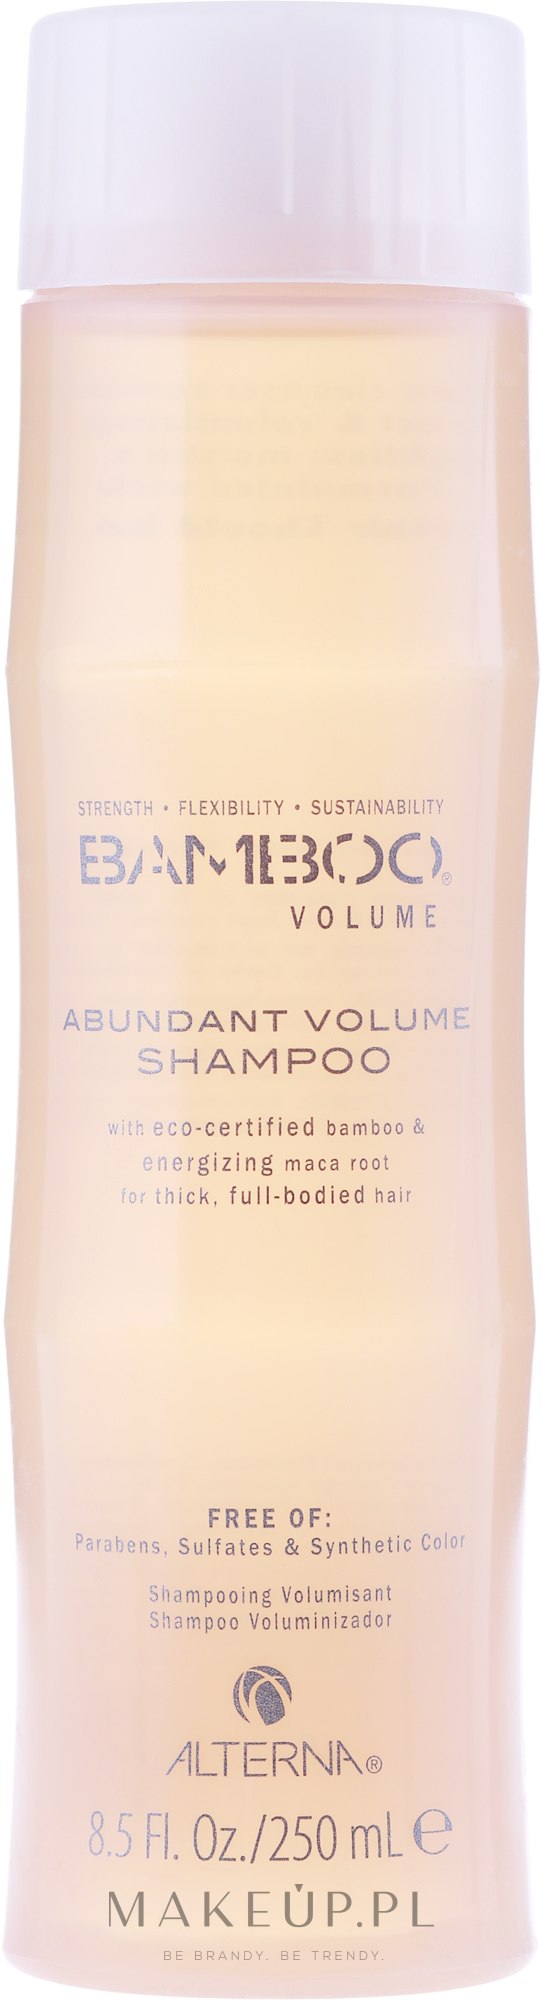 bamboo volume abundant volume szampon odżywka